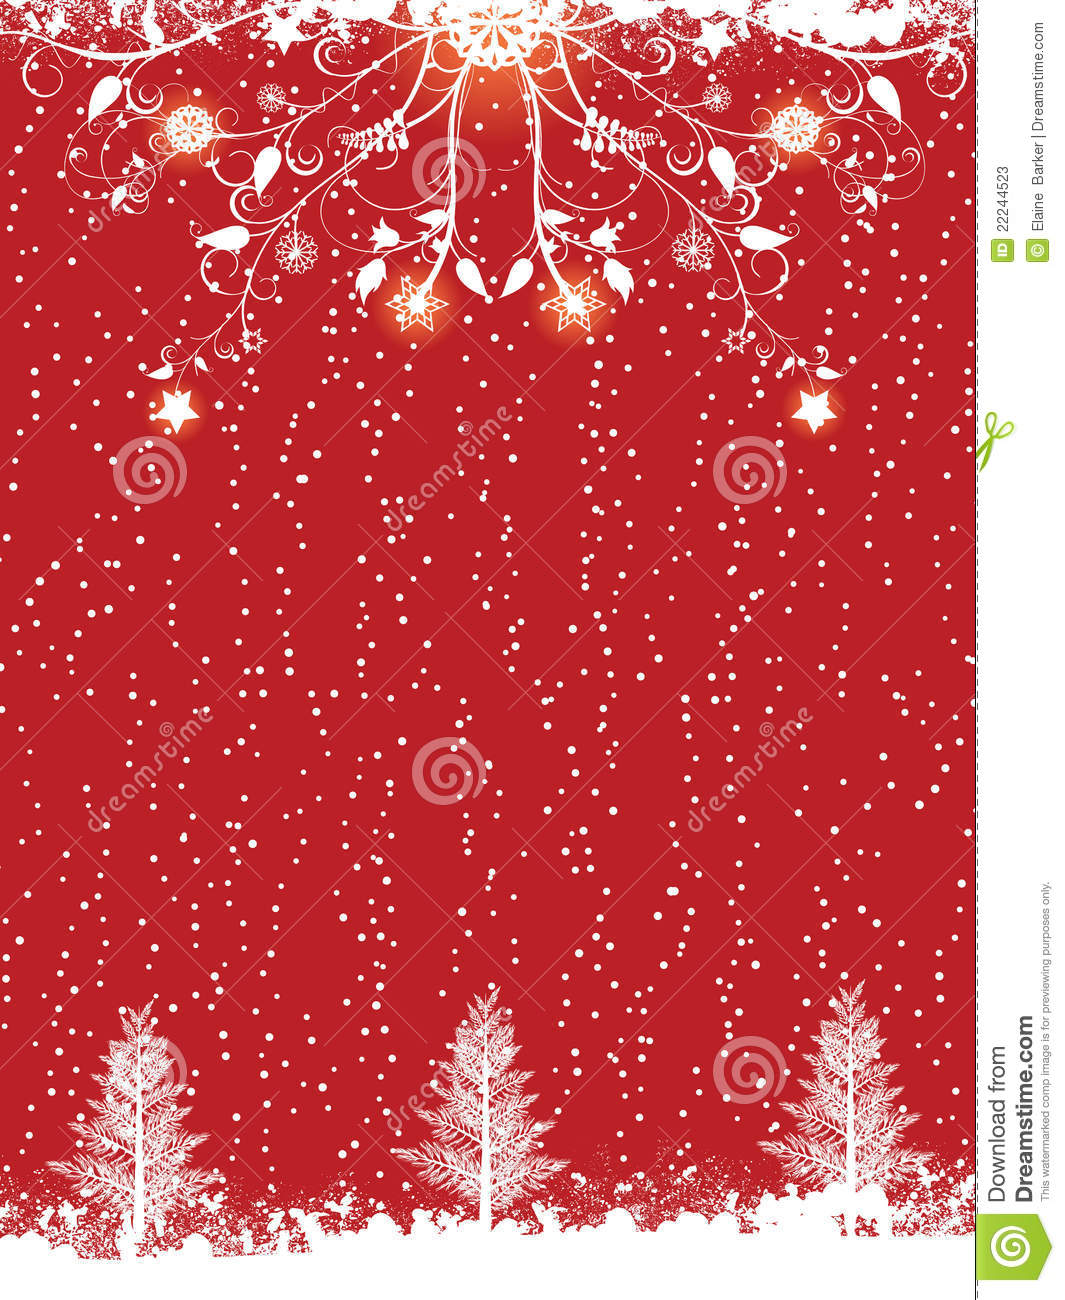 Red Winter Flourish And Christmas Tree Background Stock Photos   Image